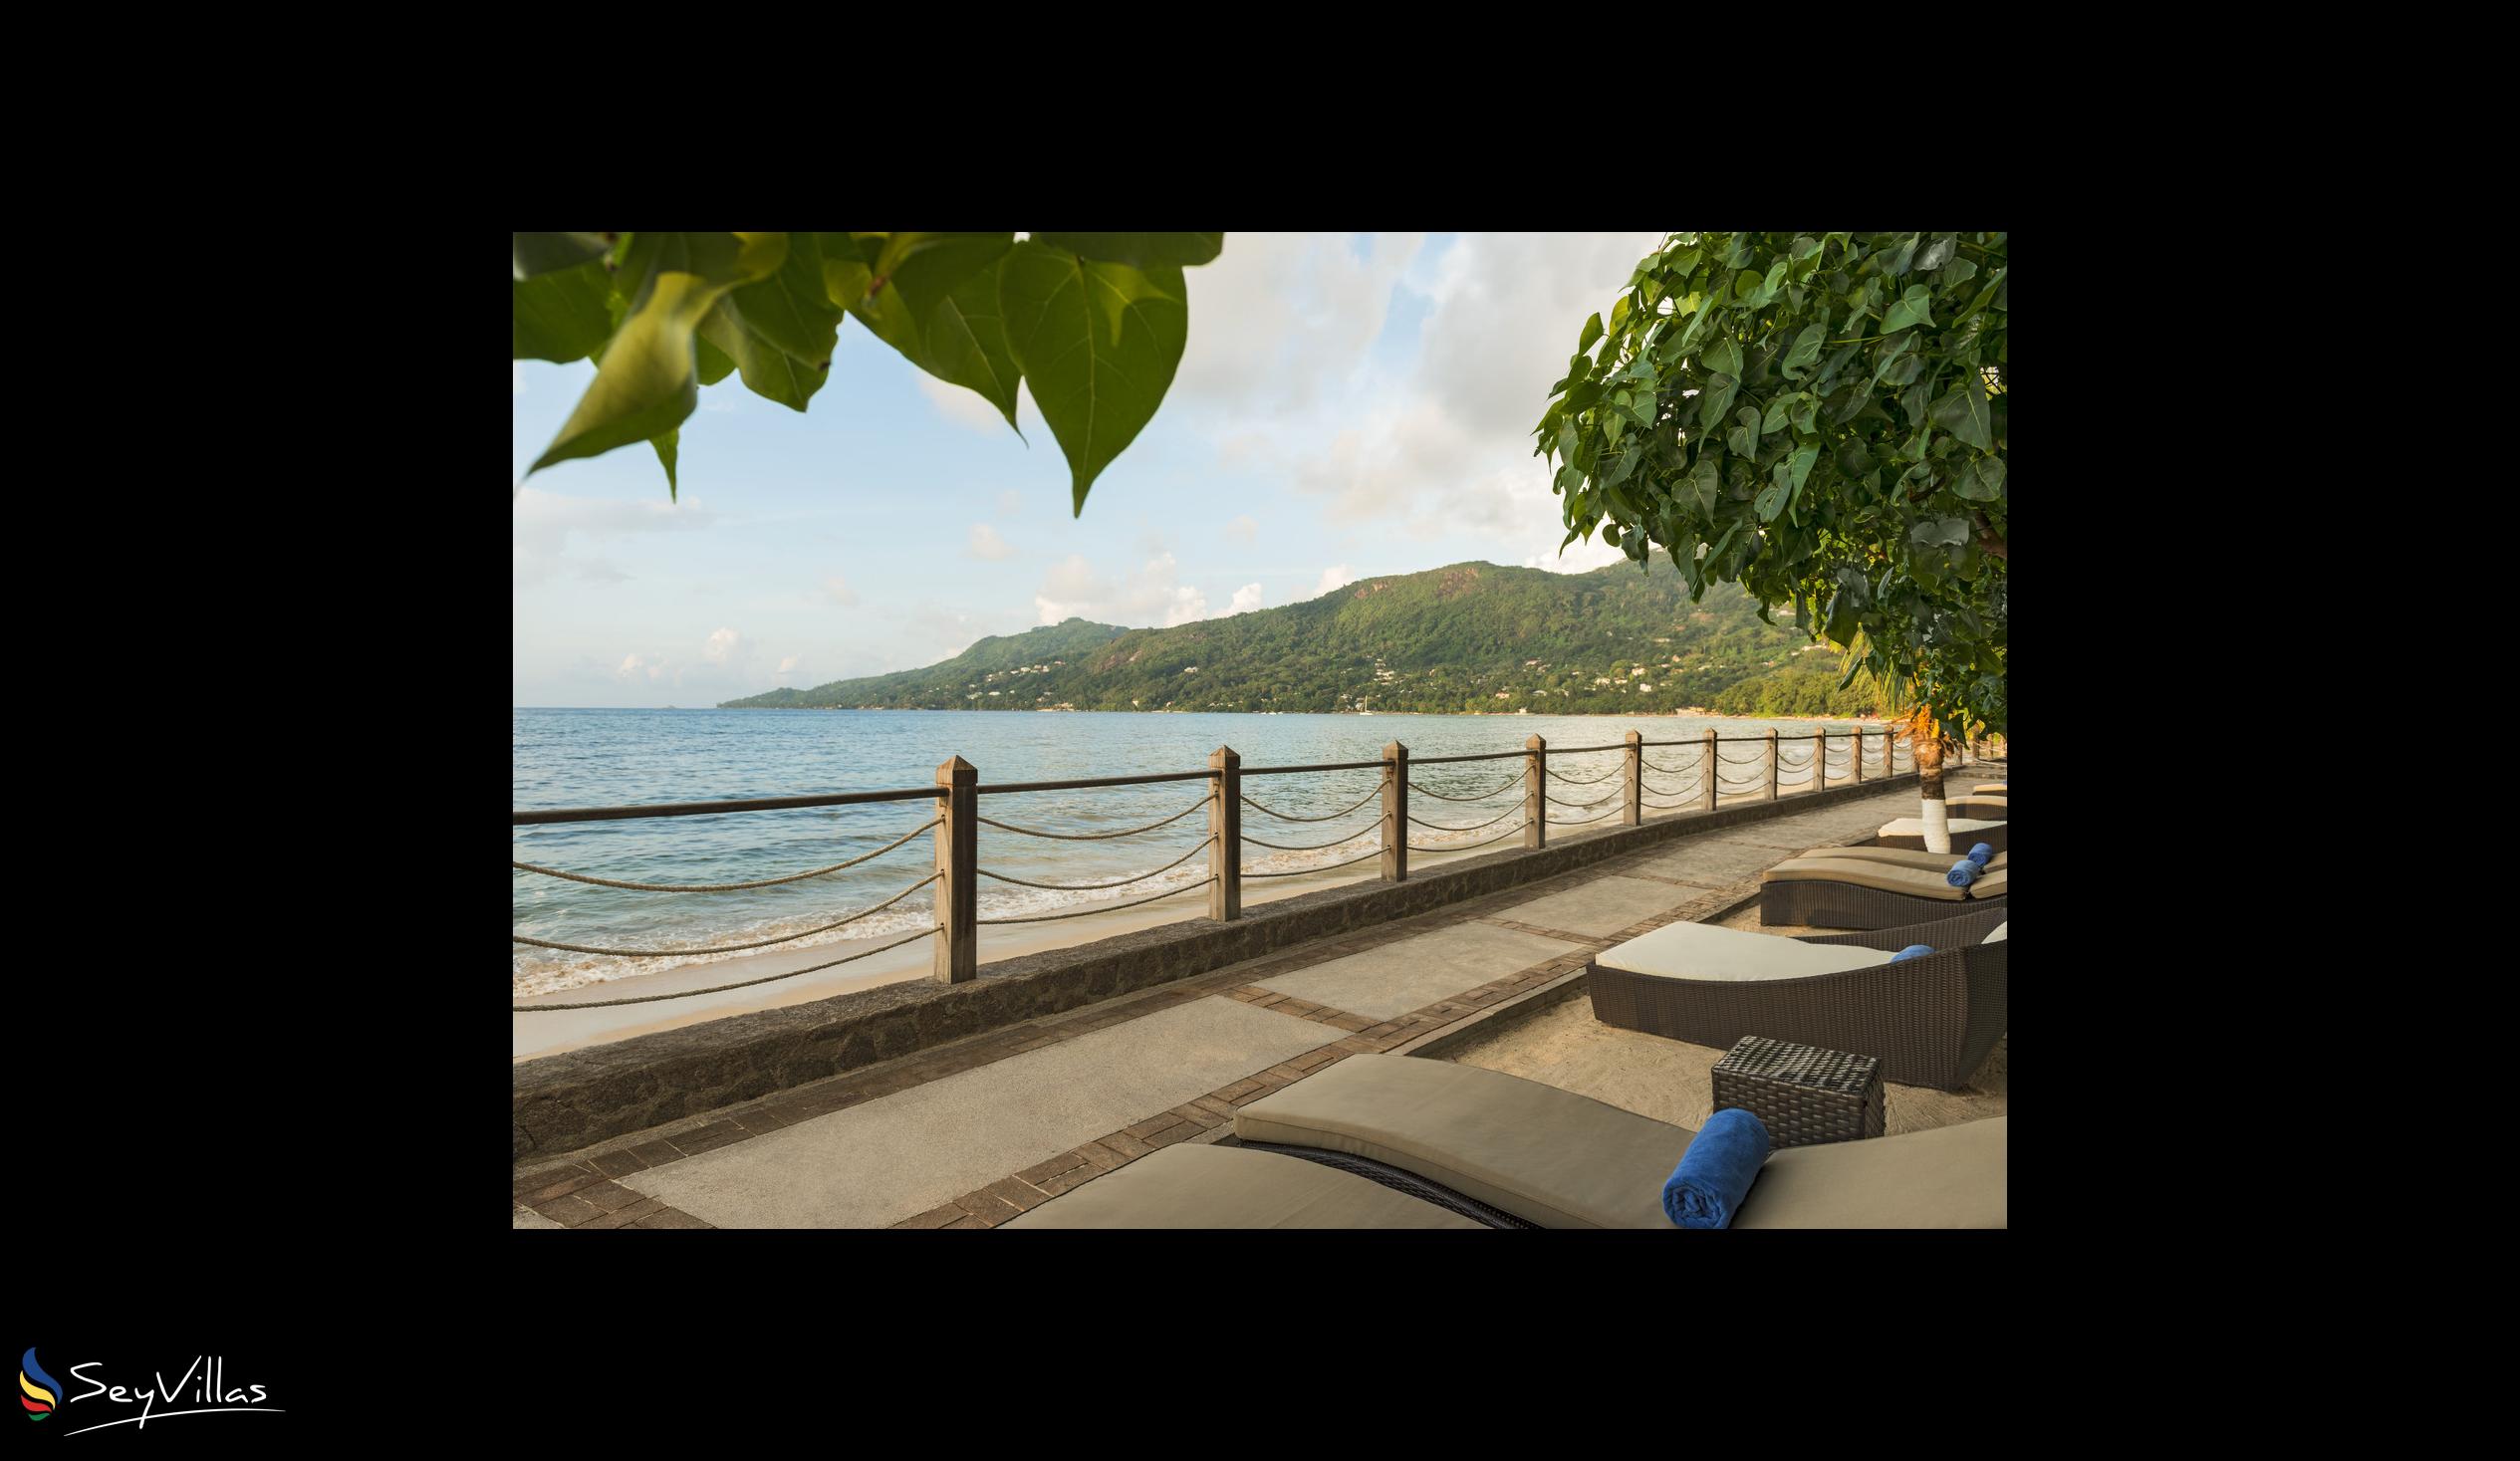 Photo 8: Fisherman's Cove Resort - Outdoor area - Mahé (Seychelles)